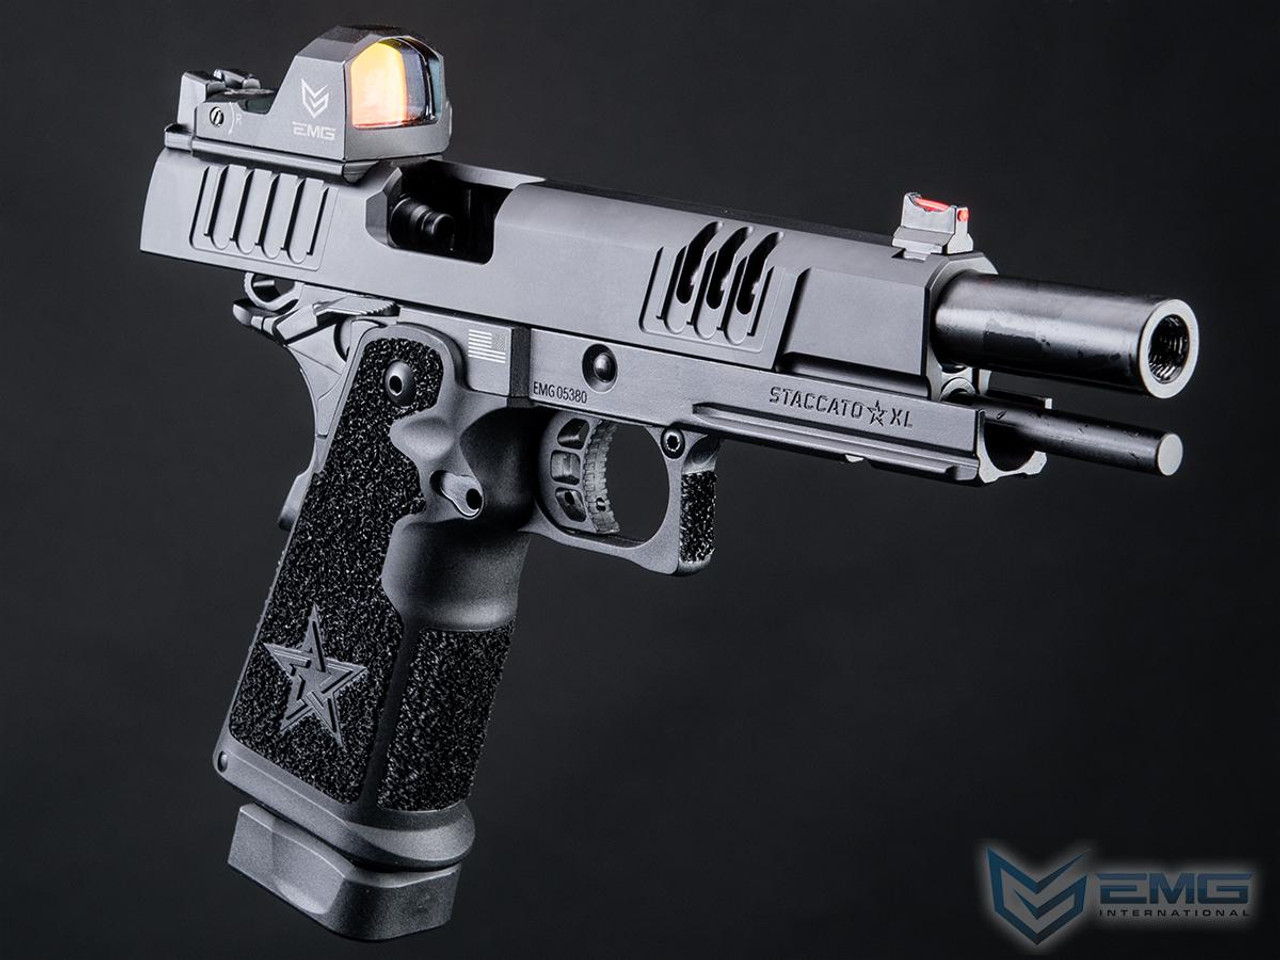 EMG Staccato Licensed XL 2011 CO2 Pistol | Pro Grip CNC